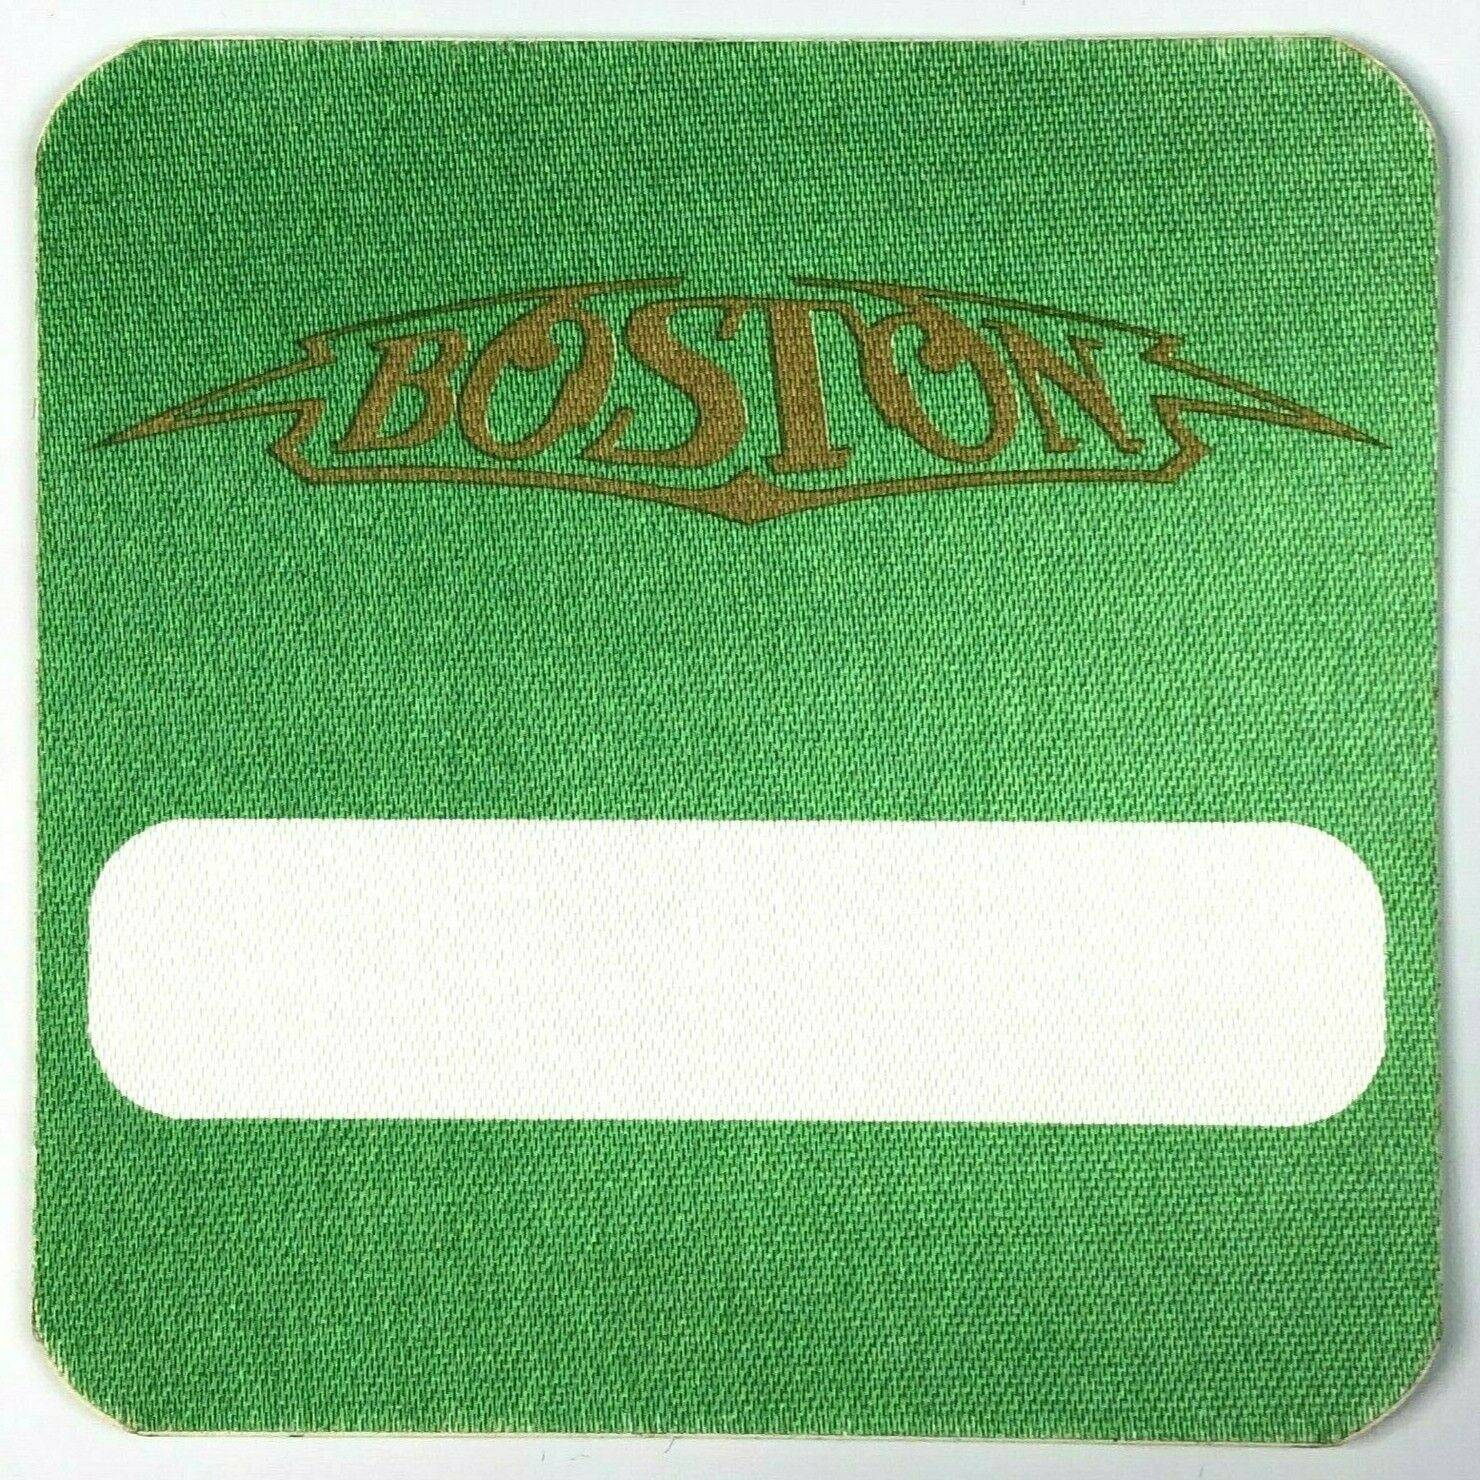 Boston Rock Band 1994 VIP Crew Concert Pass Cloth Sticker Unused Backstage